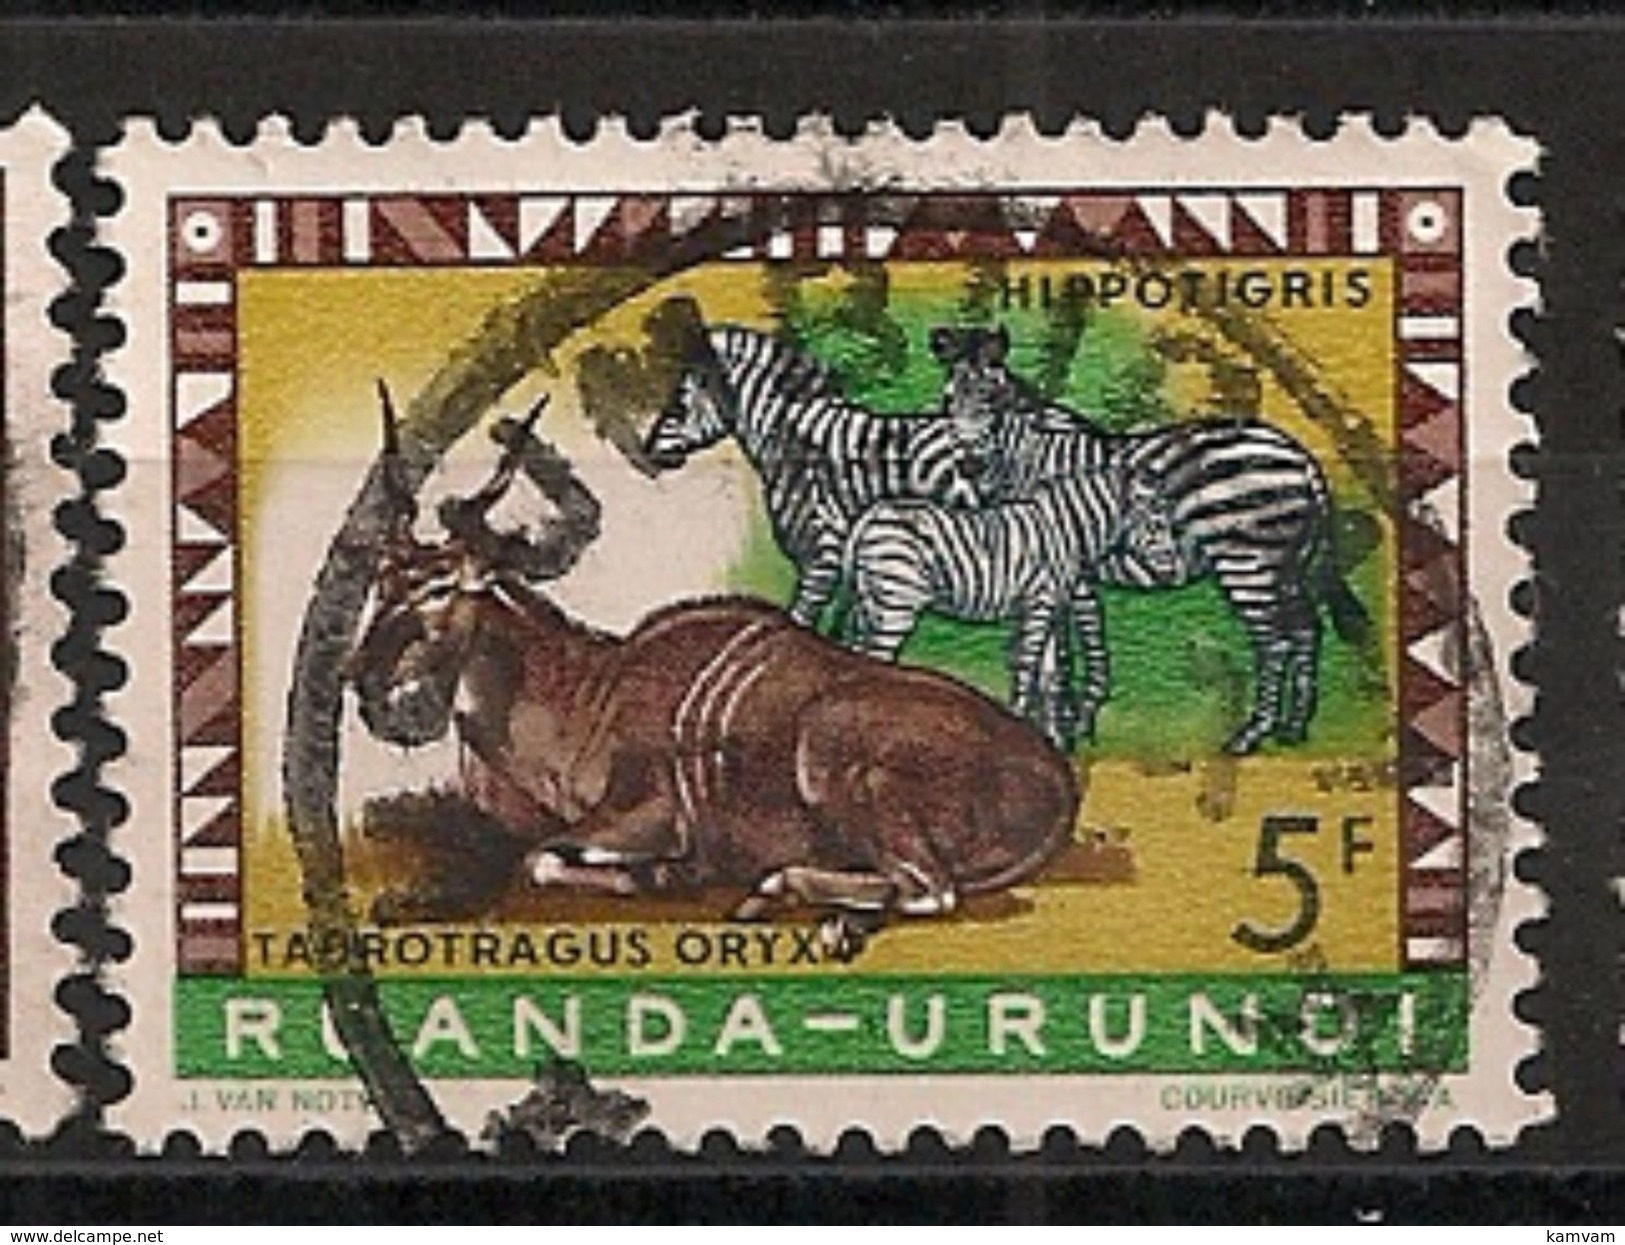 CONGO RUANDA URUNDI 213 USUMBURA - Usados